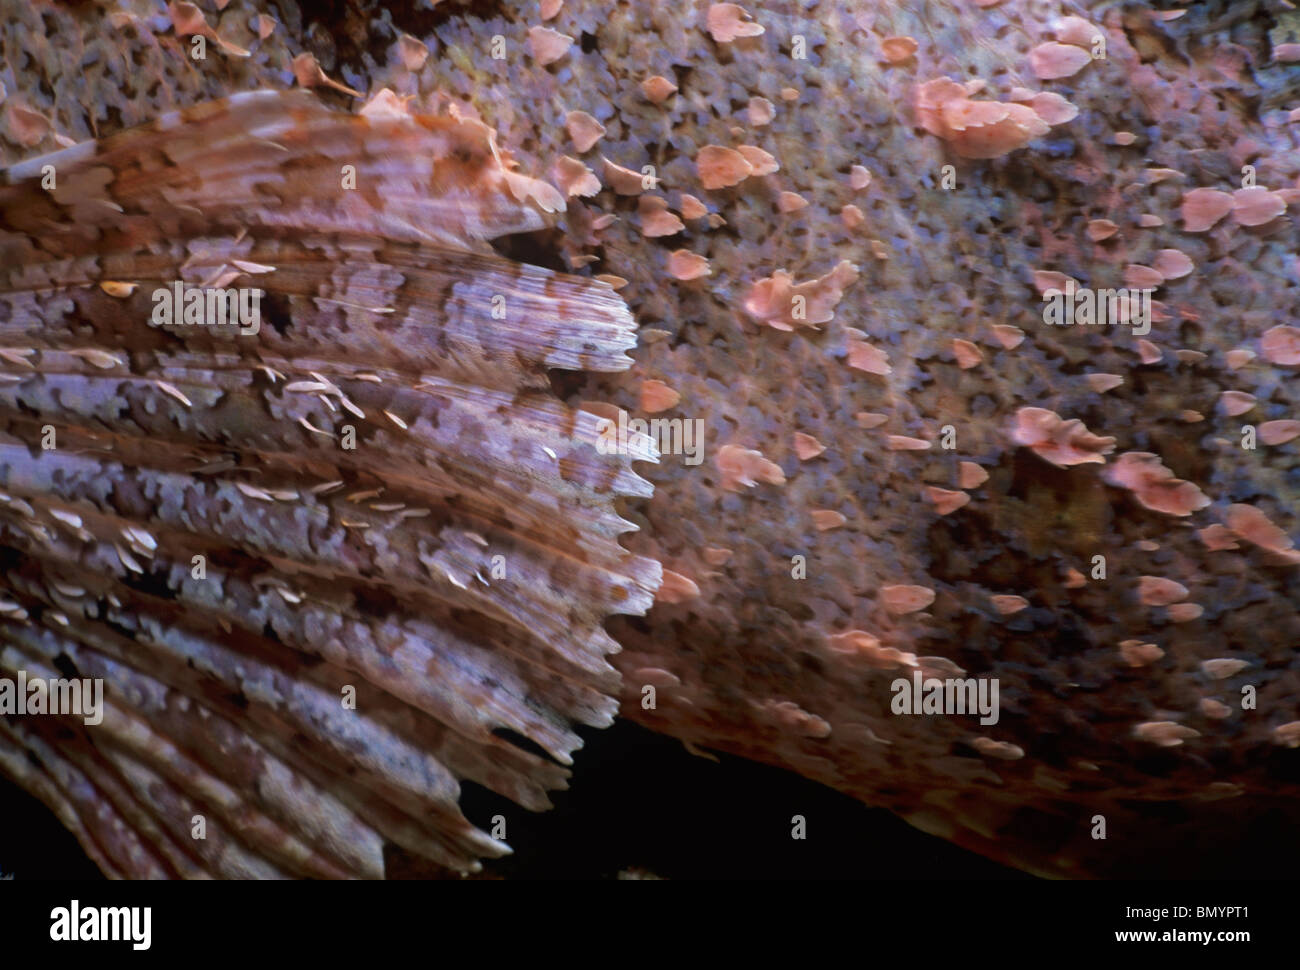 Nageoire pectorale de Tassled Scorpionfish (Scorpaneopsis oxcephala). Egypte - Mer Rouge Banque D'Images